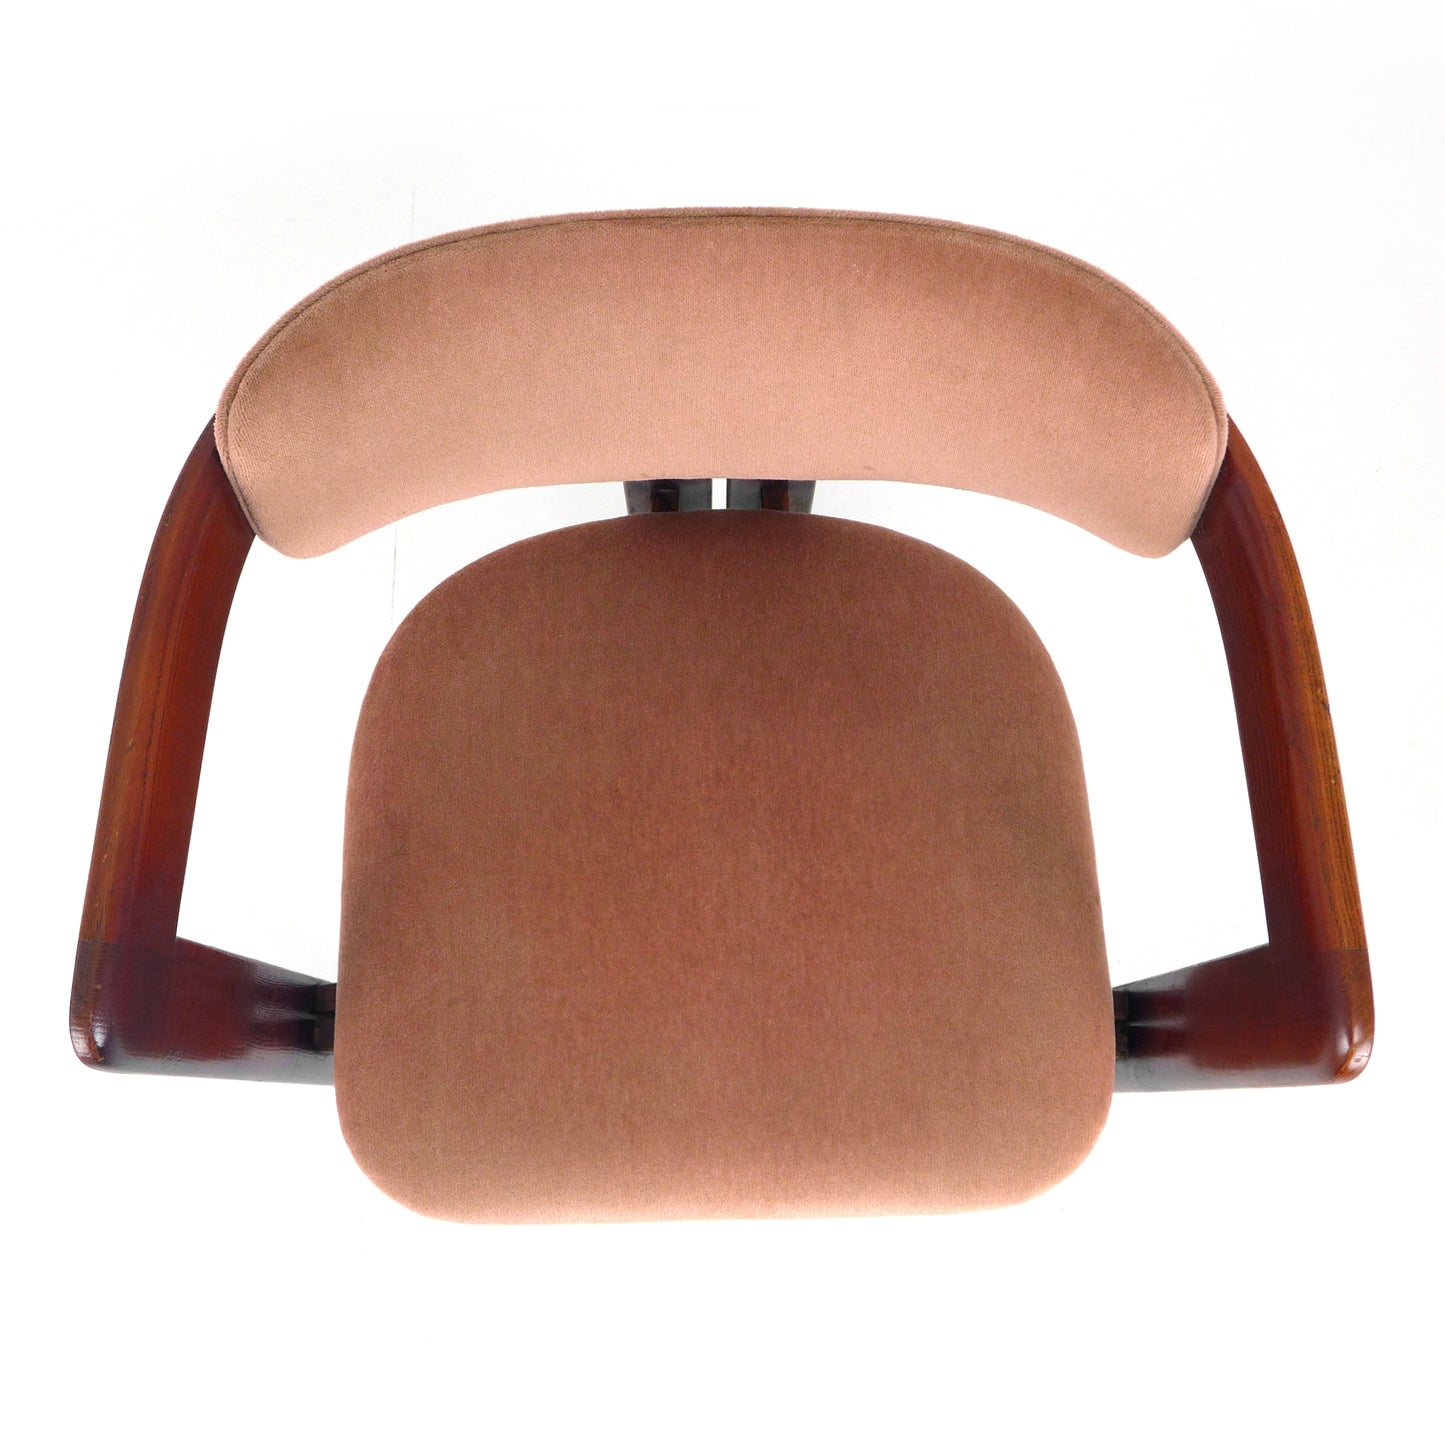 Tobia Scarpa "Pigreco" Chair circa 1956 for Gavina - Italian Mid Century Classic